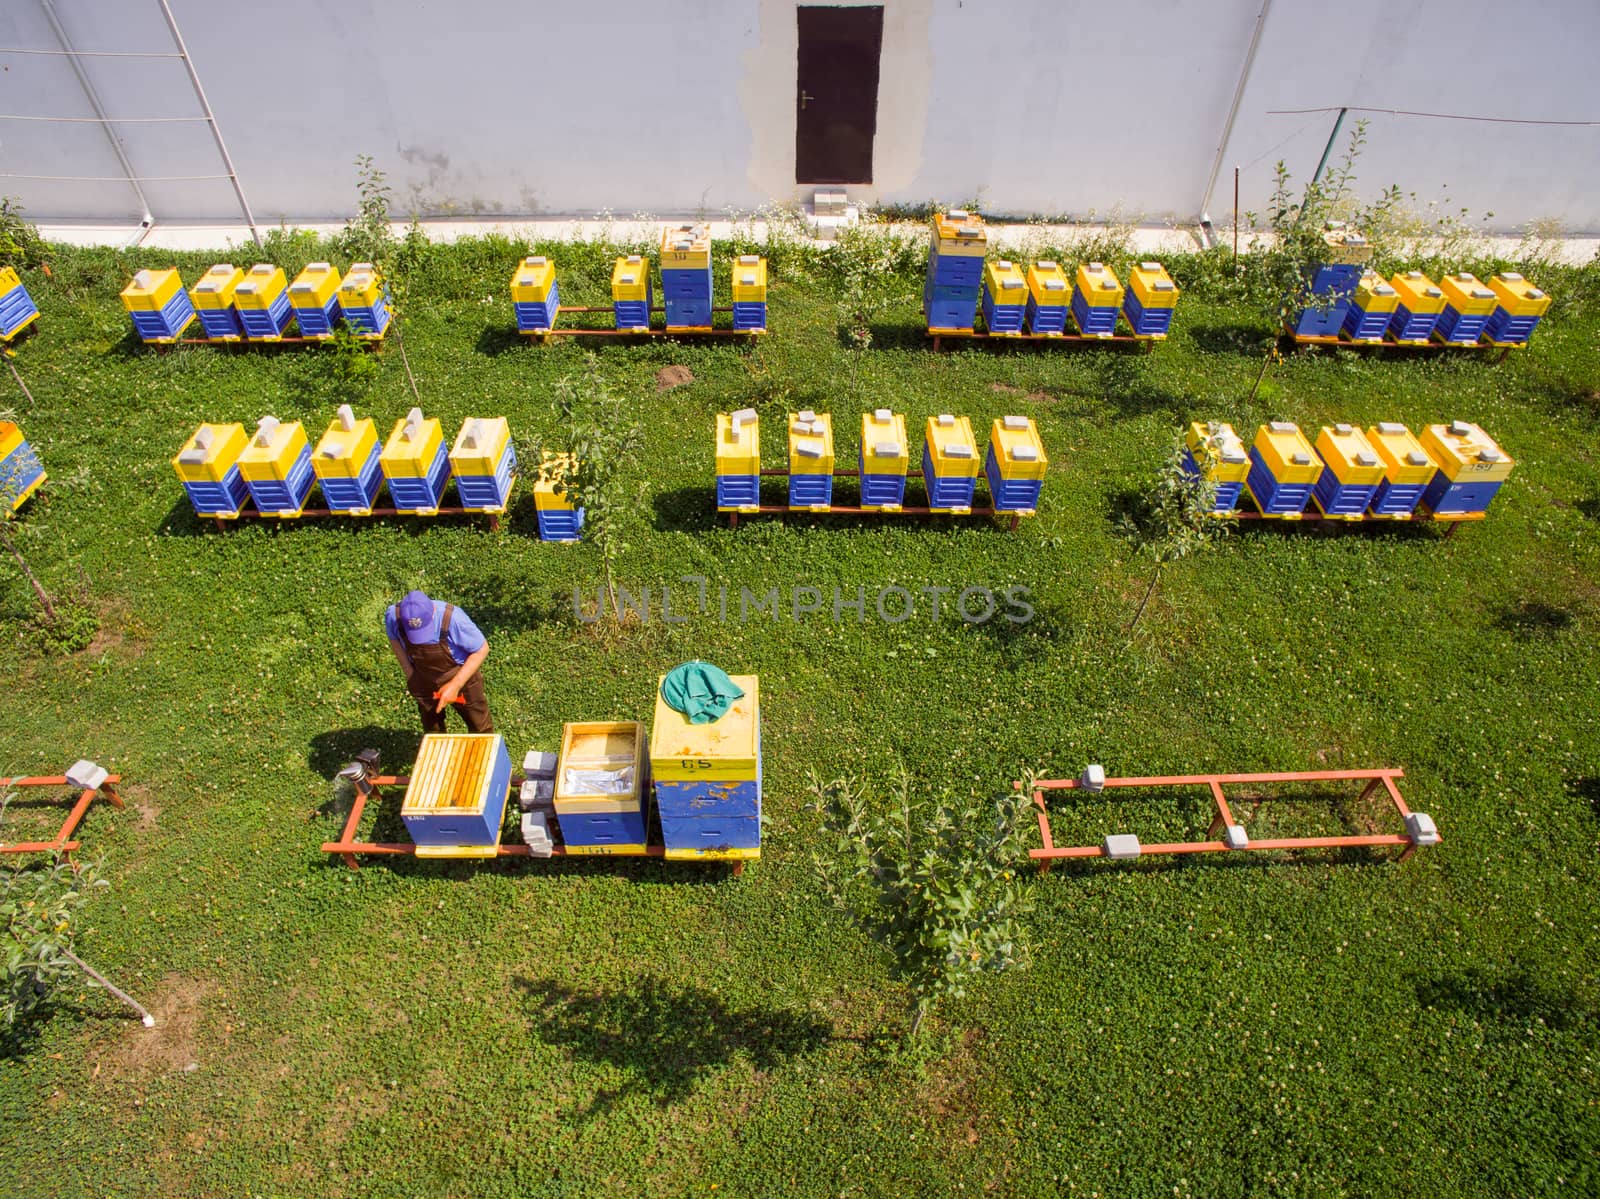 The beekeeper inspects the hives. Industrial beekeeping by TrEKone